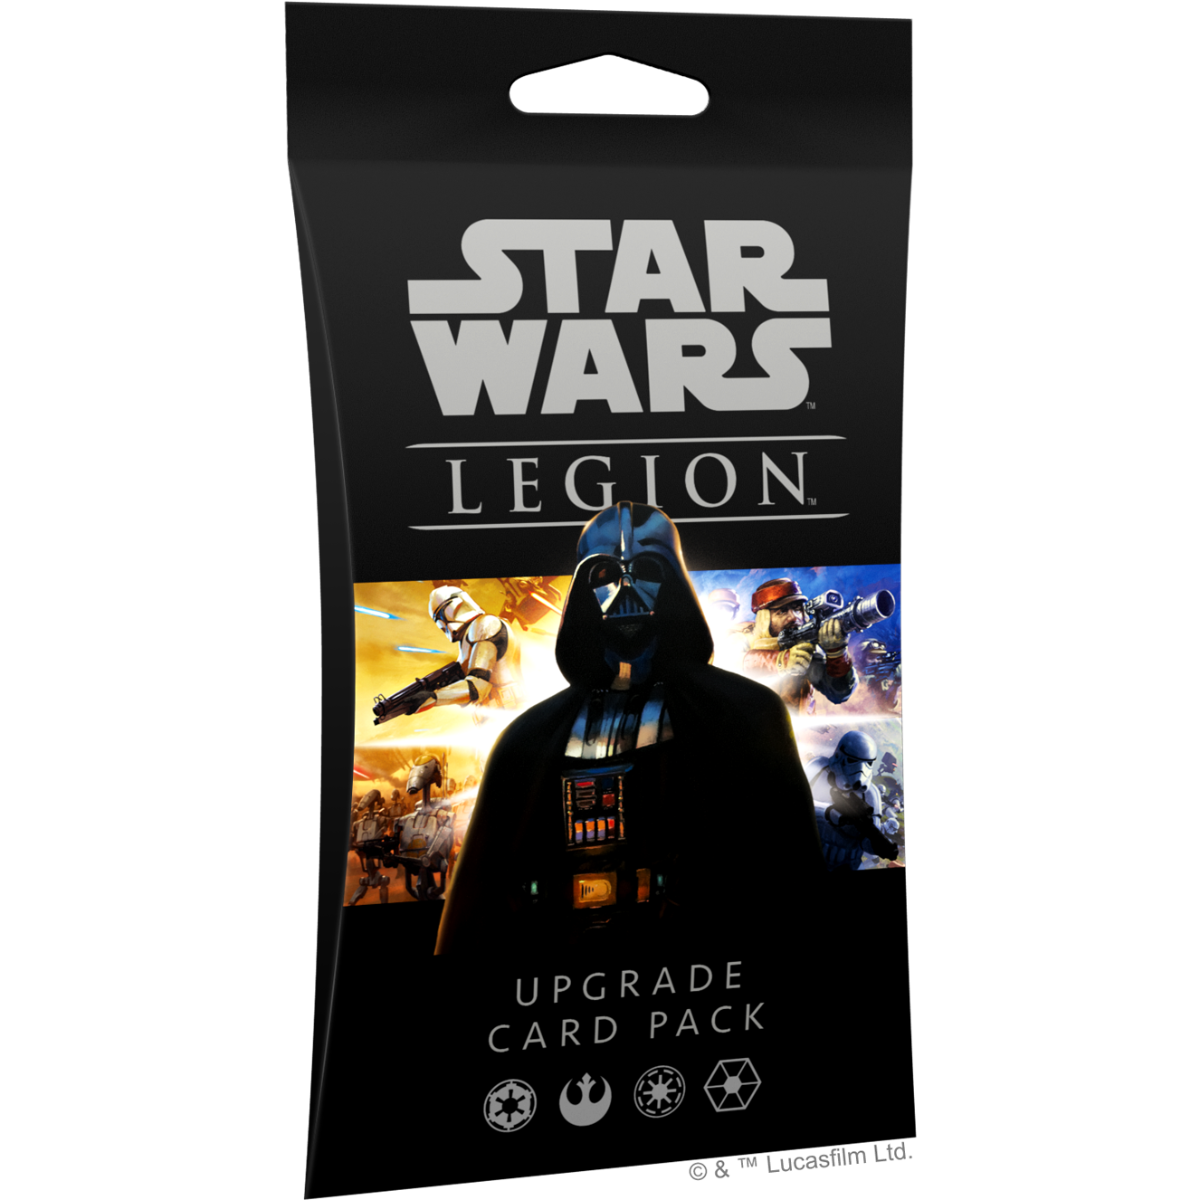 Upgrade Card Pack (Star Wars Legion)